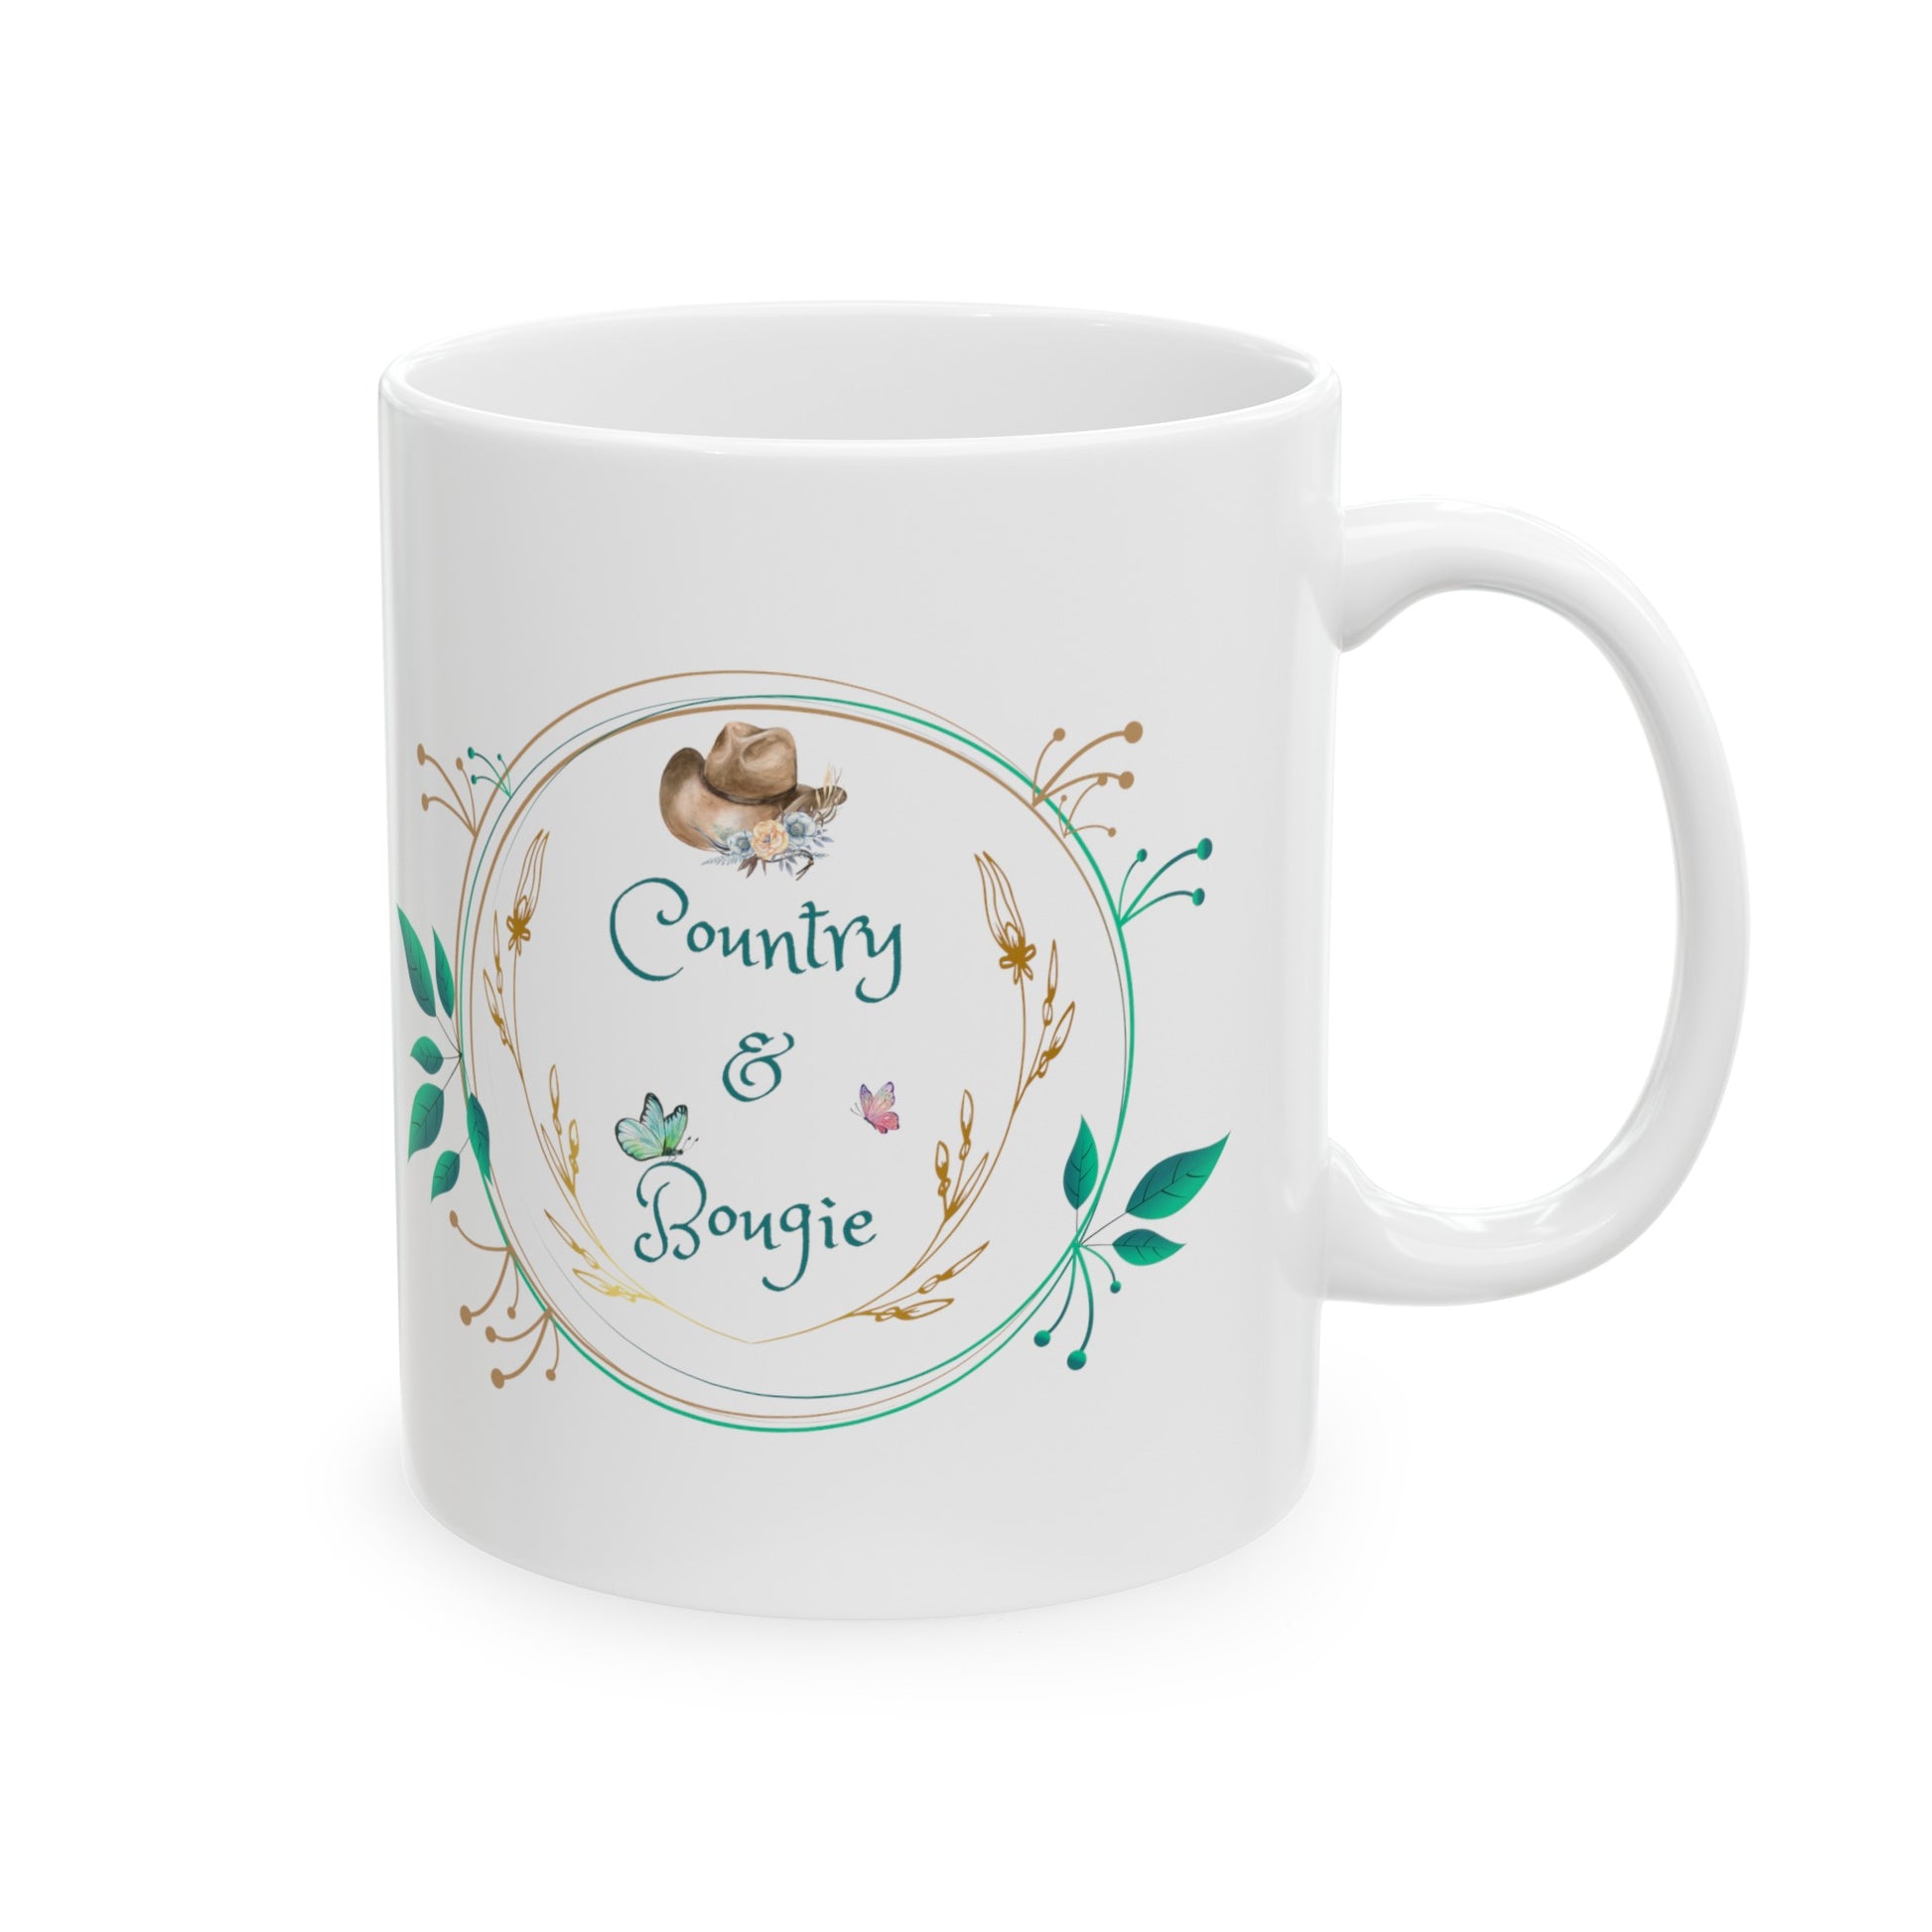 Country & Bougie Ceramic Mug - The Witchy Gypsy